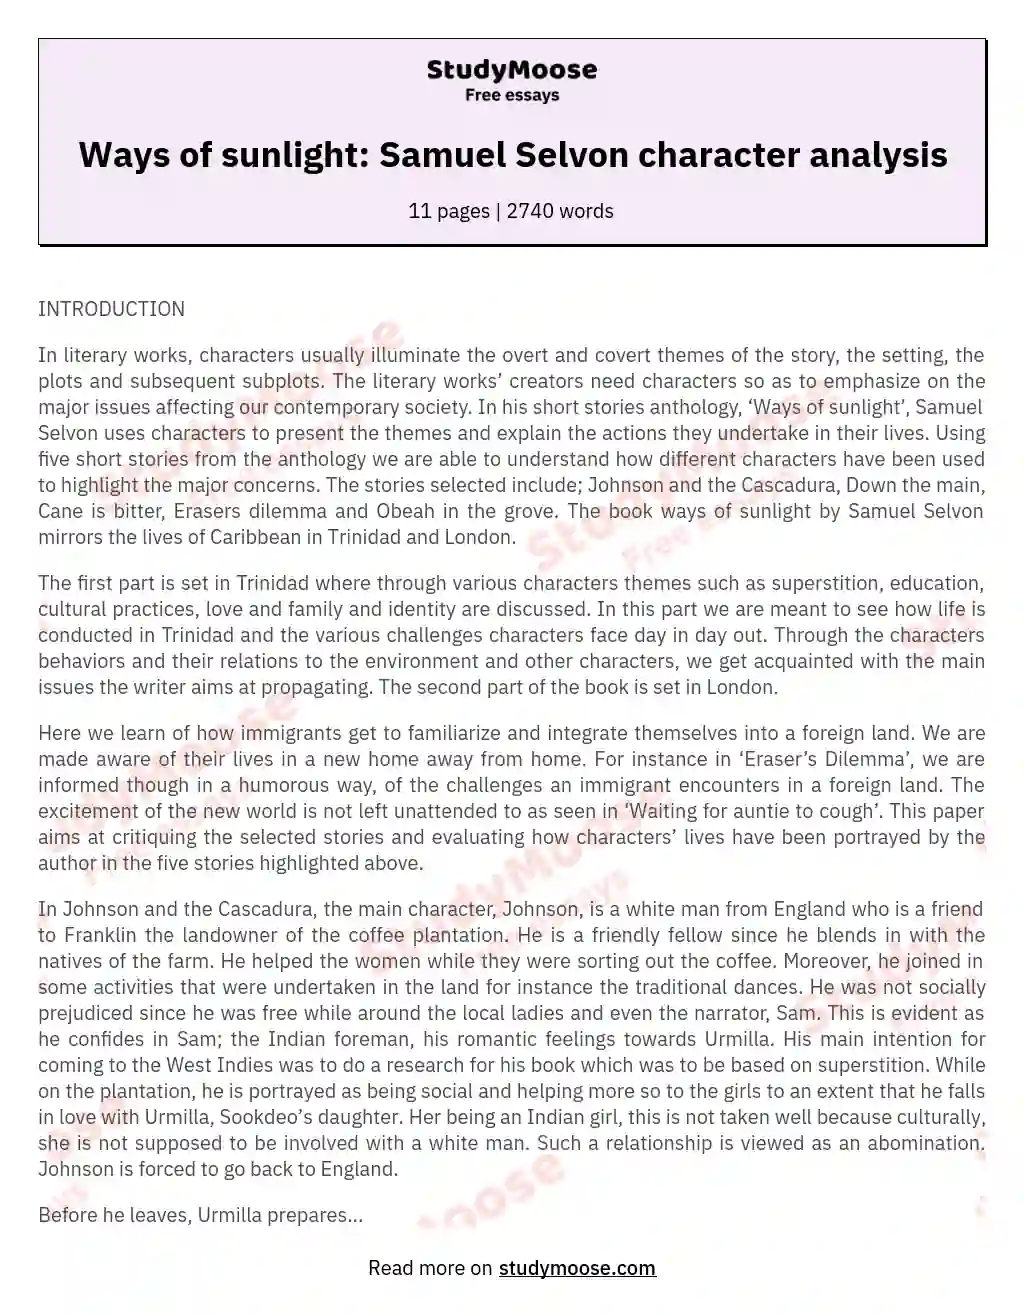 Ways of sunlight: Samuel Selvon character analysis essay